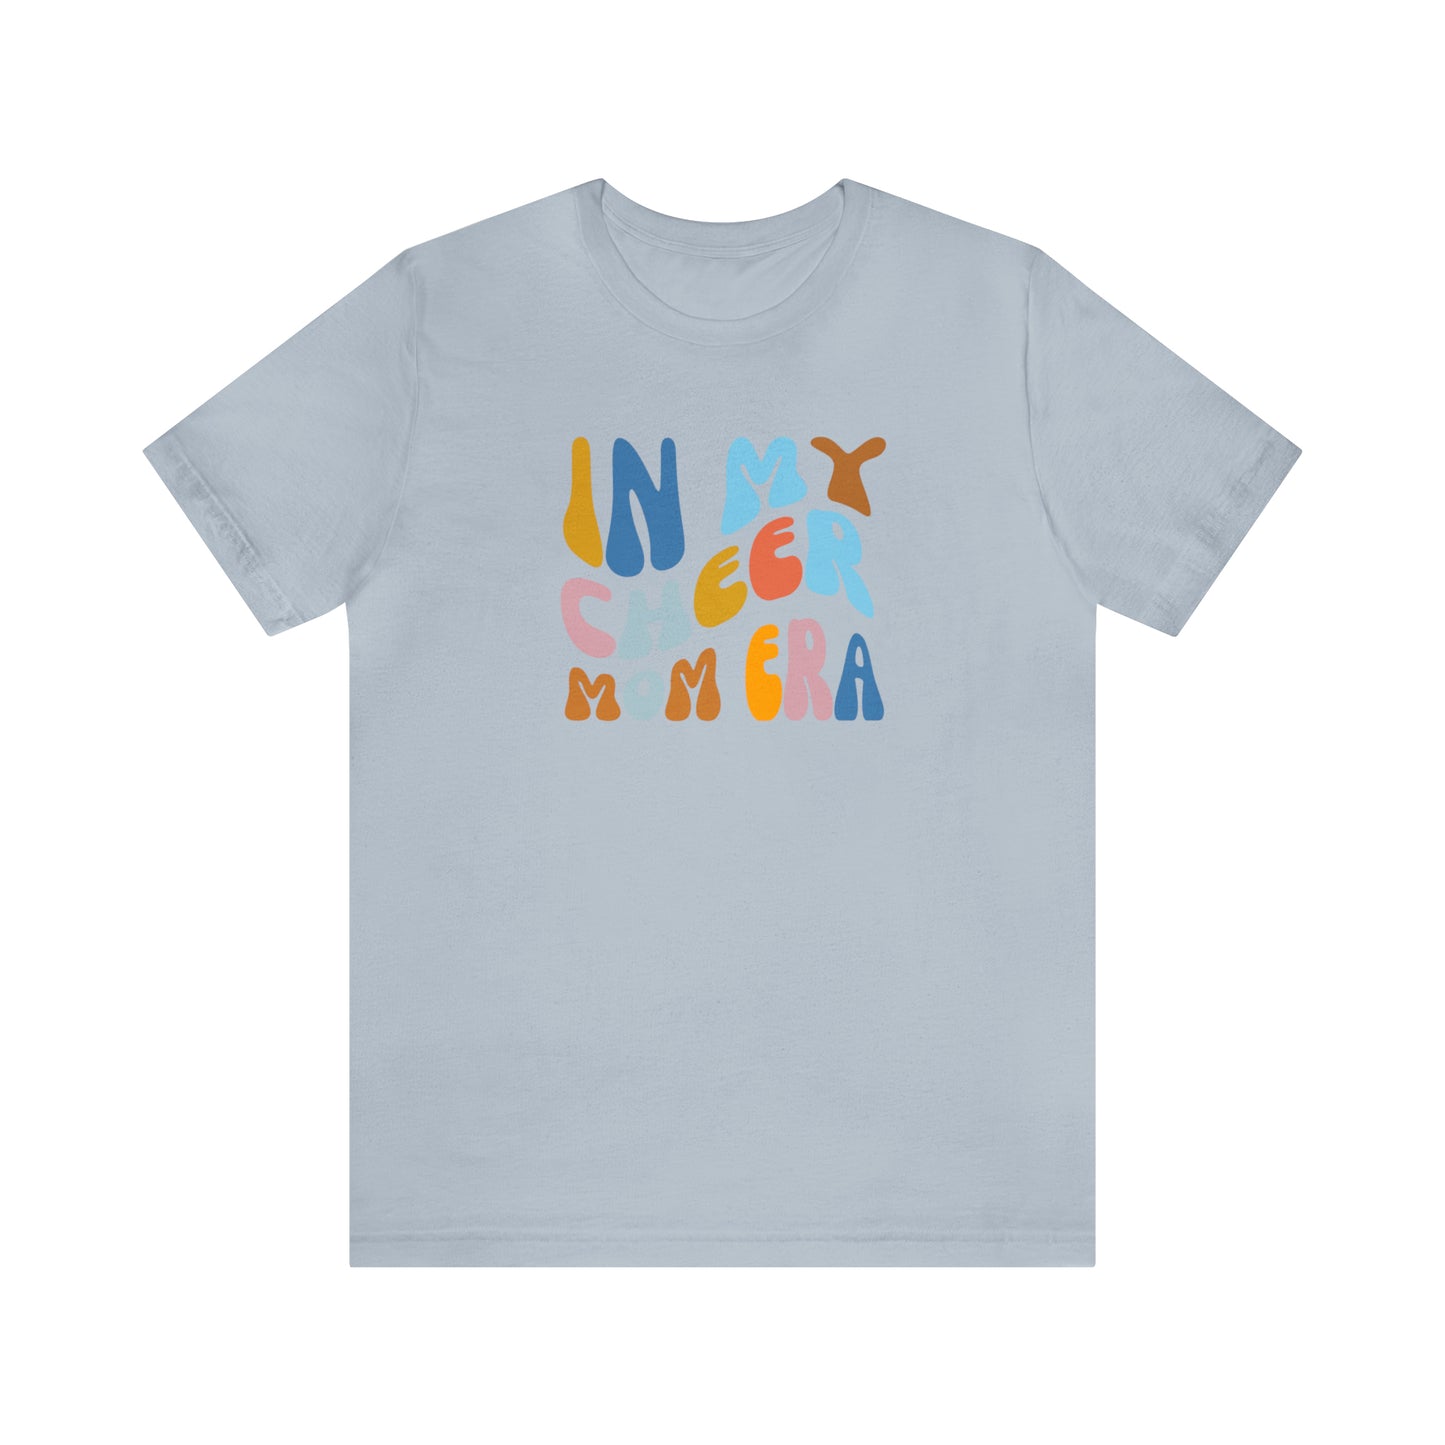 Cheer Mom Era shirt, Best Mom Shirt, Mom Life Shirt, Stage Mom Shirt, Best Mama Shirt, T244